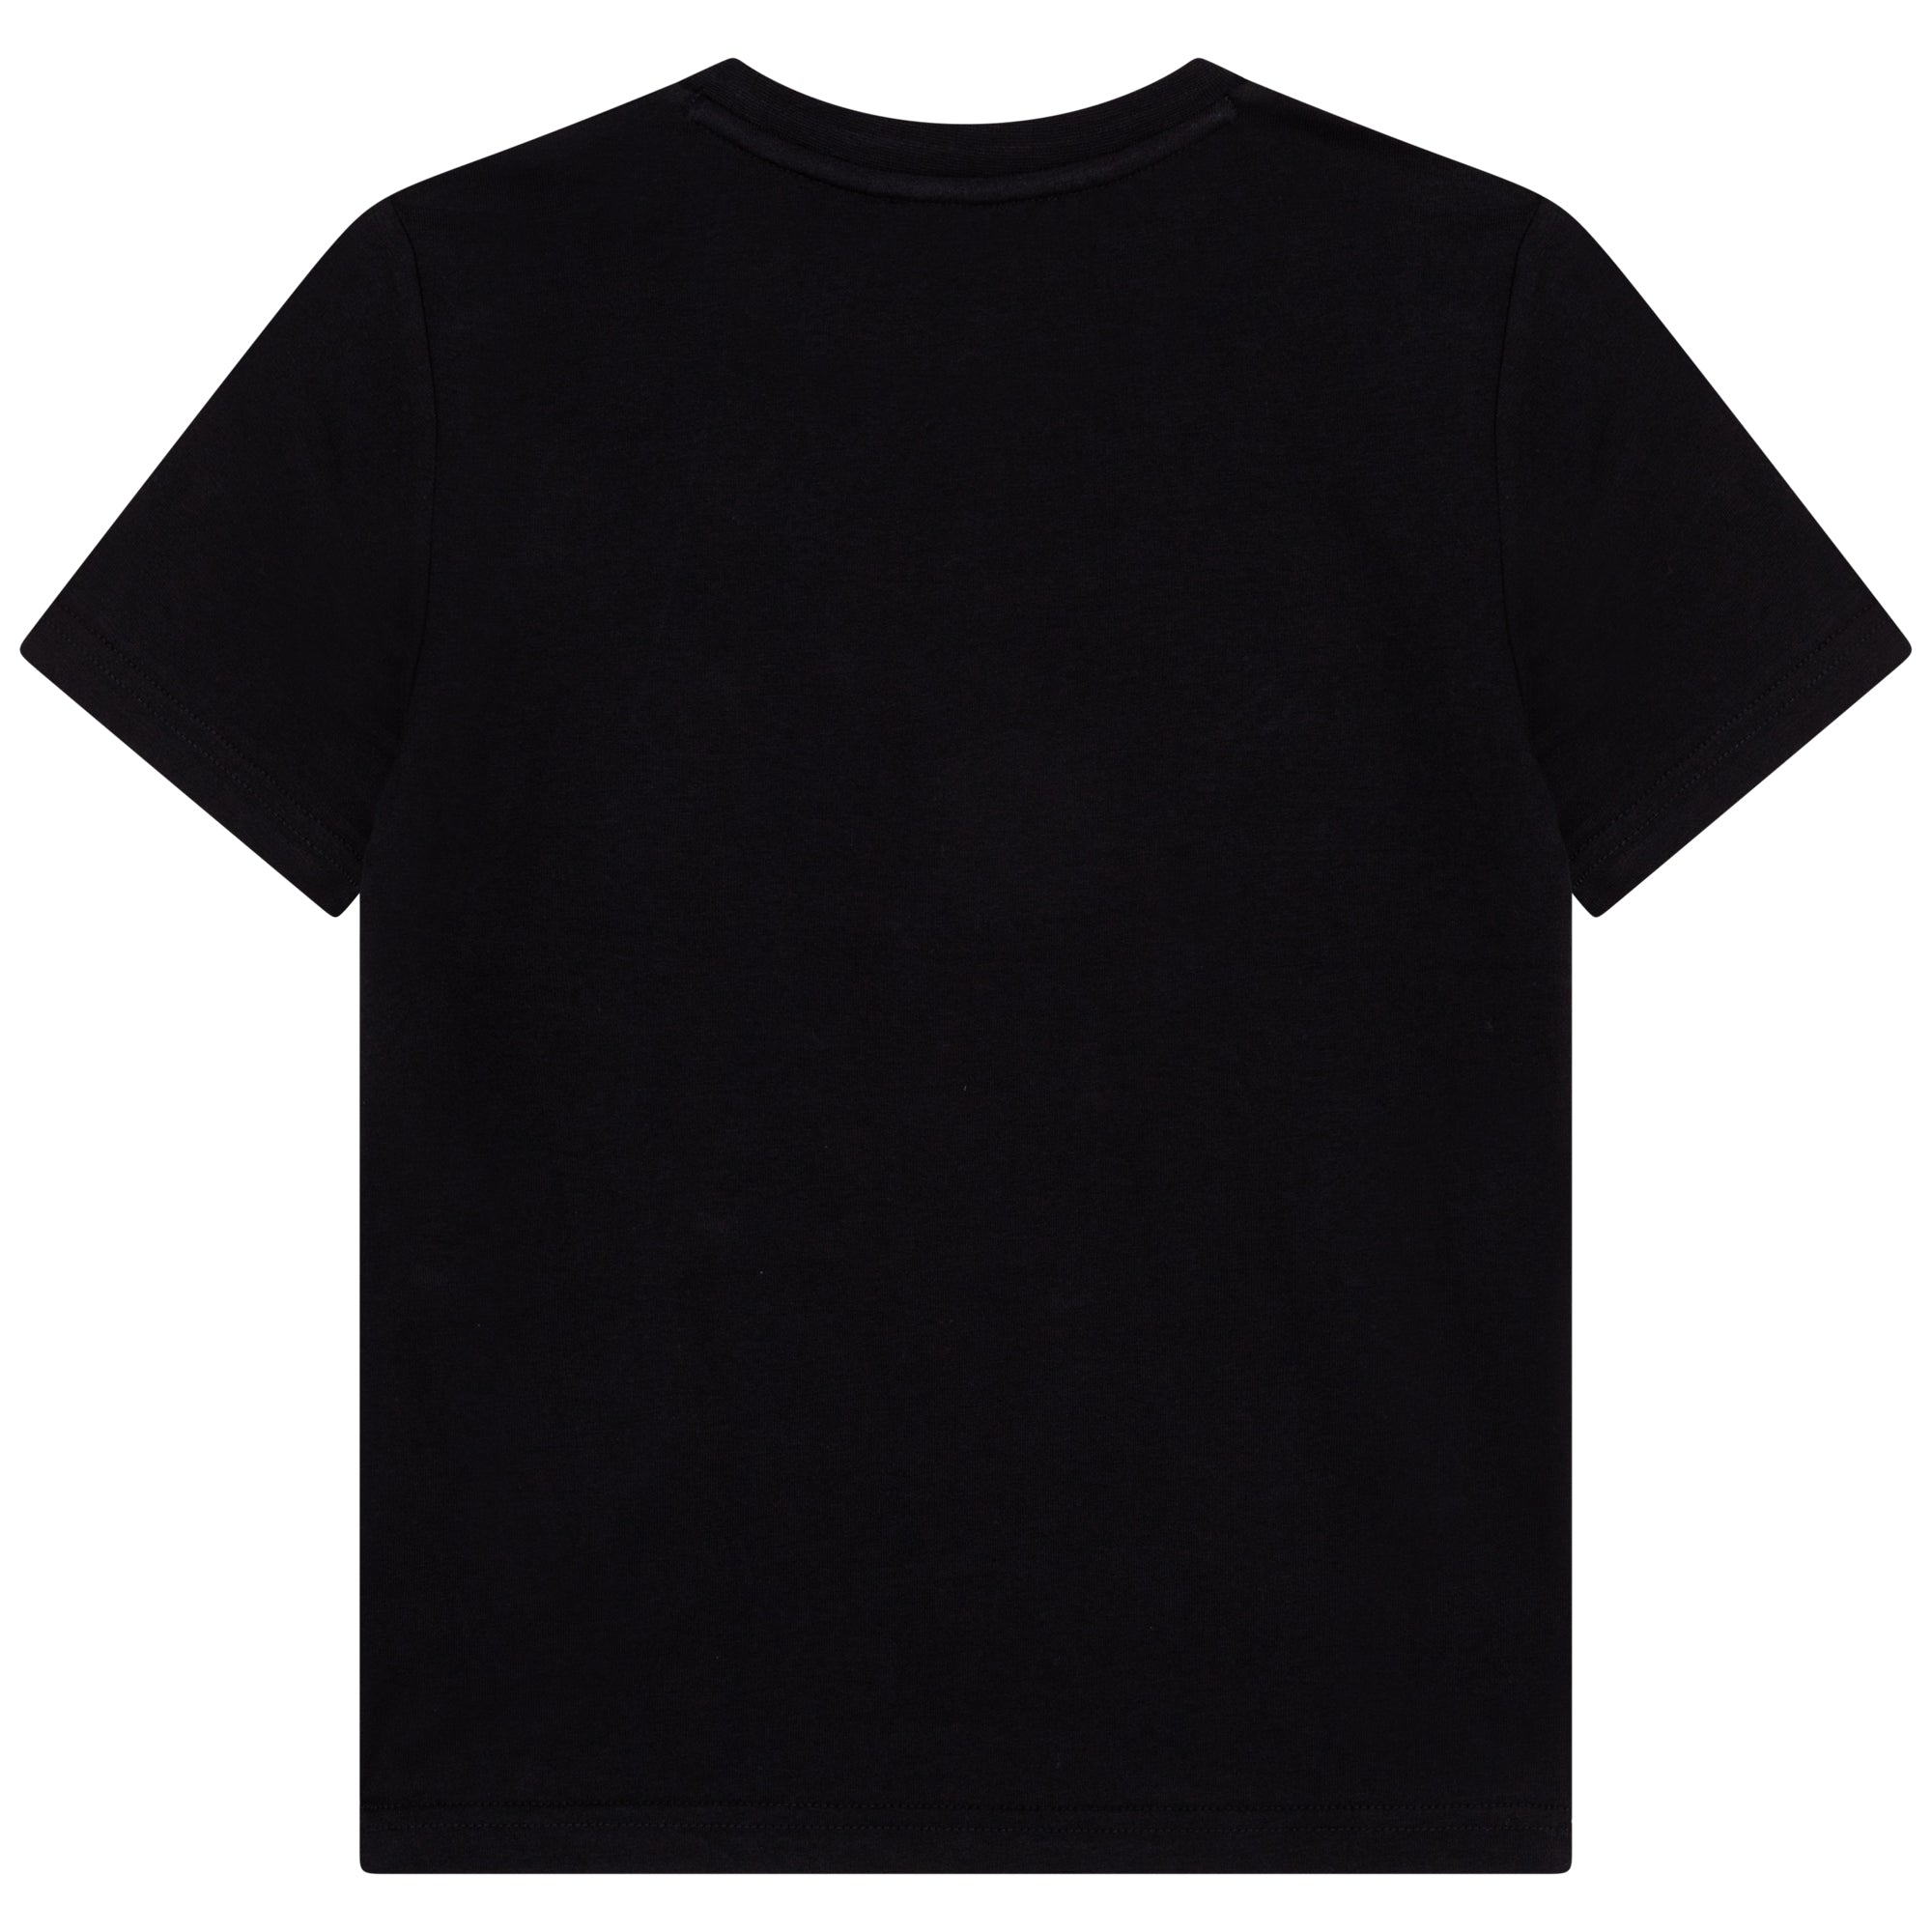 DKNY Black Graphic T-Shirt